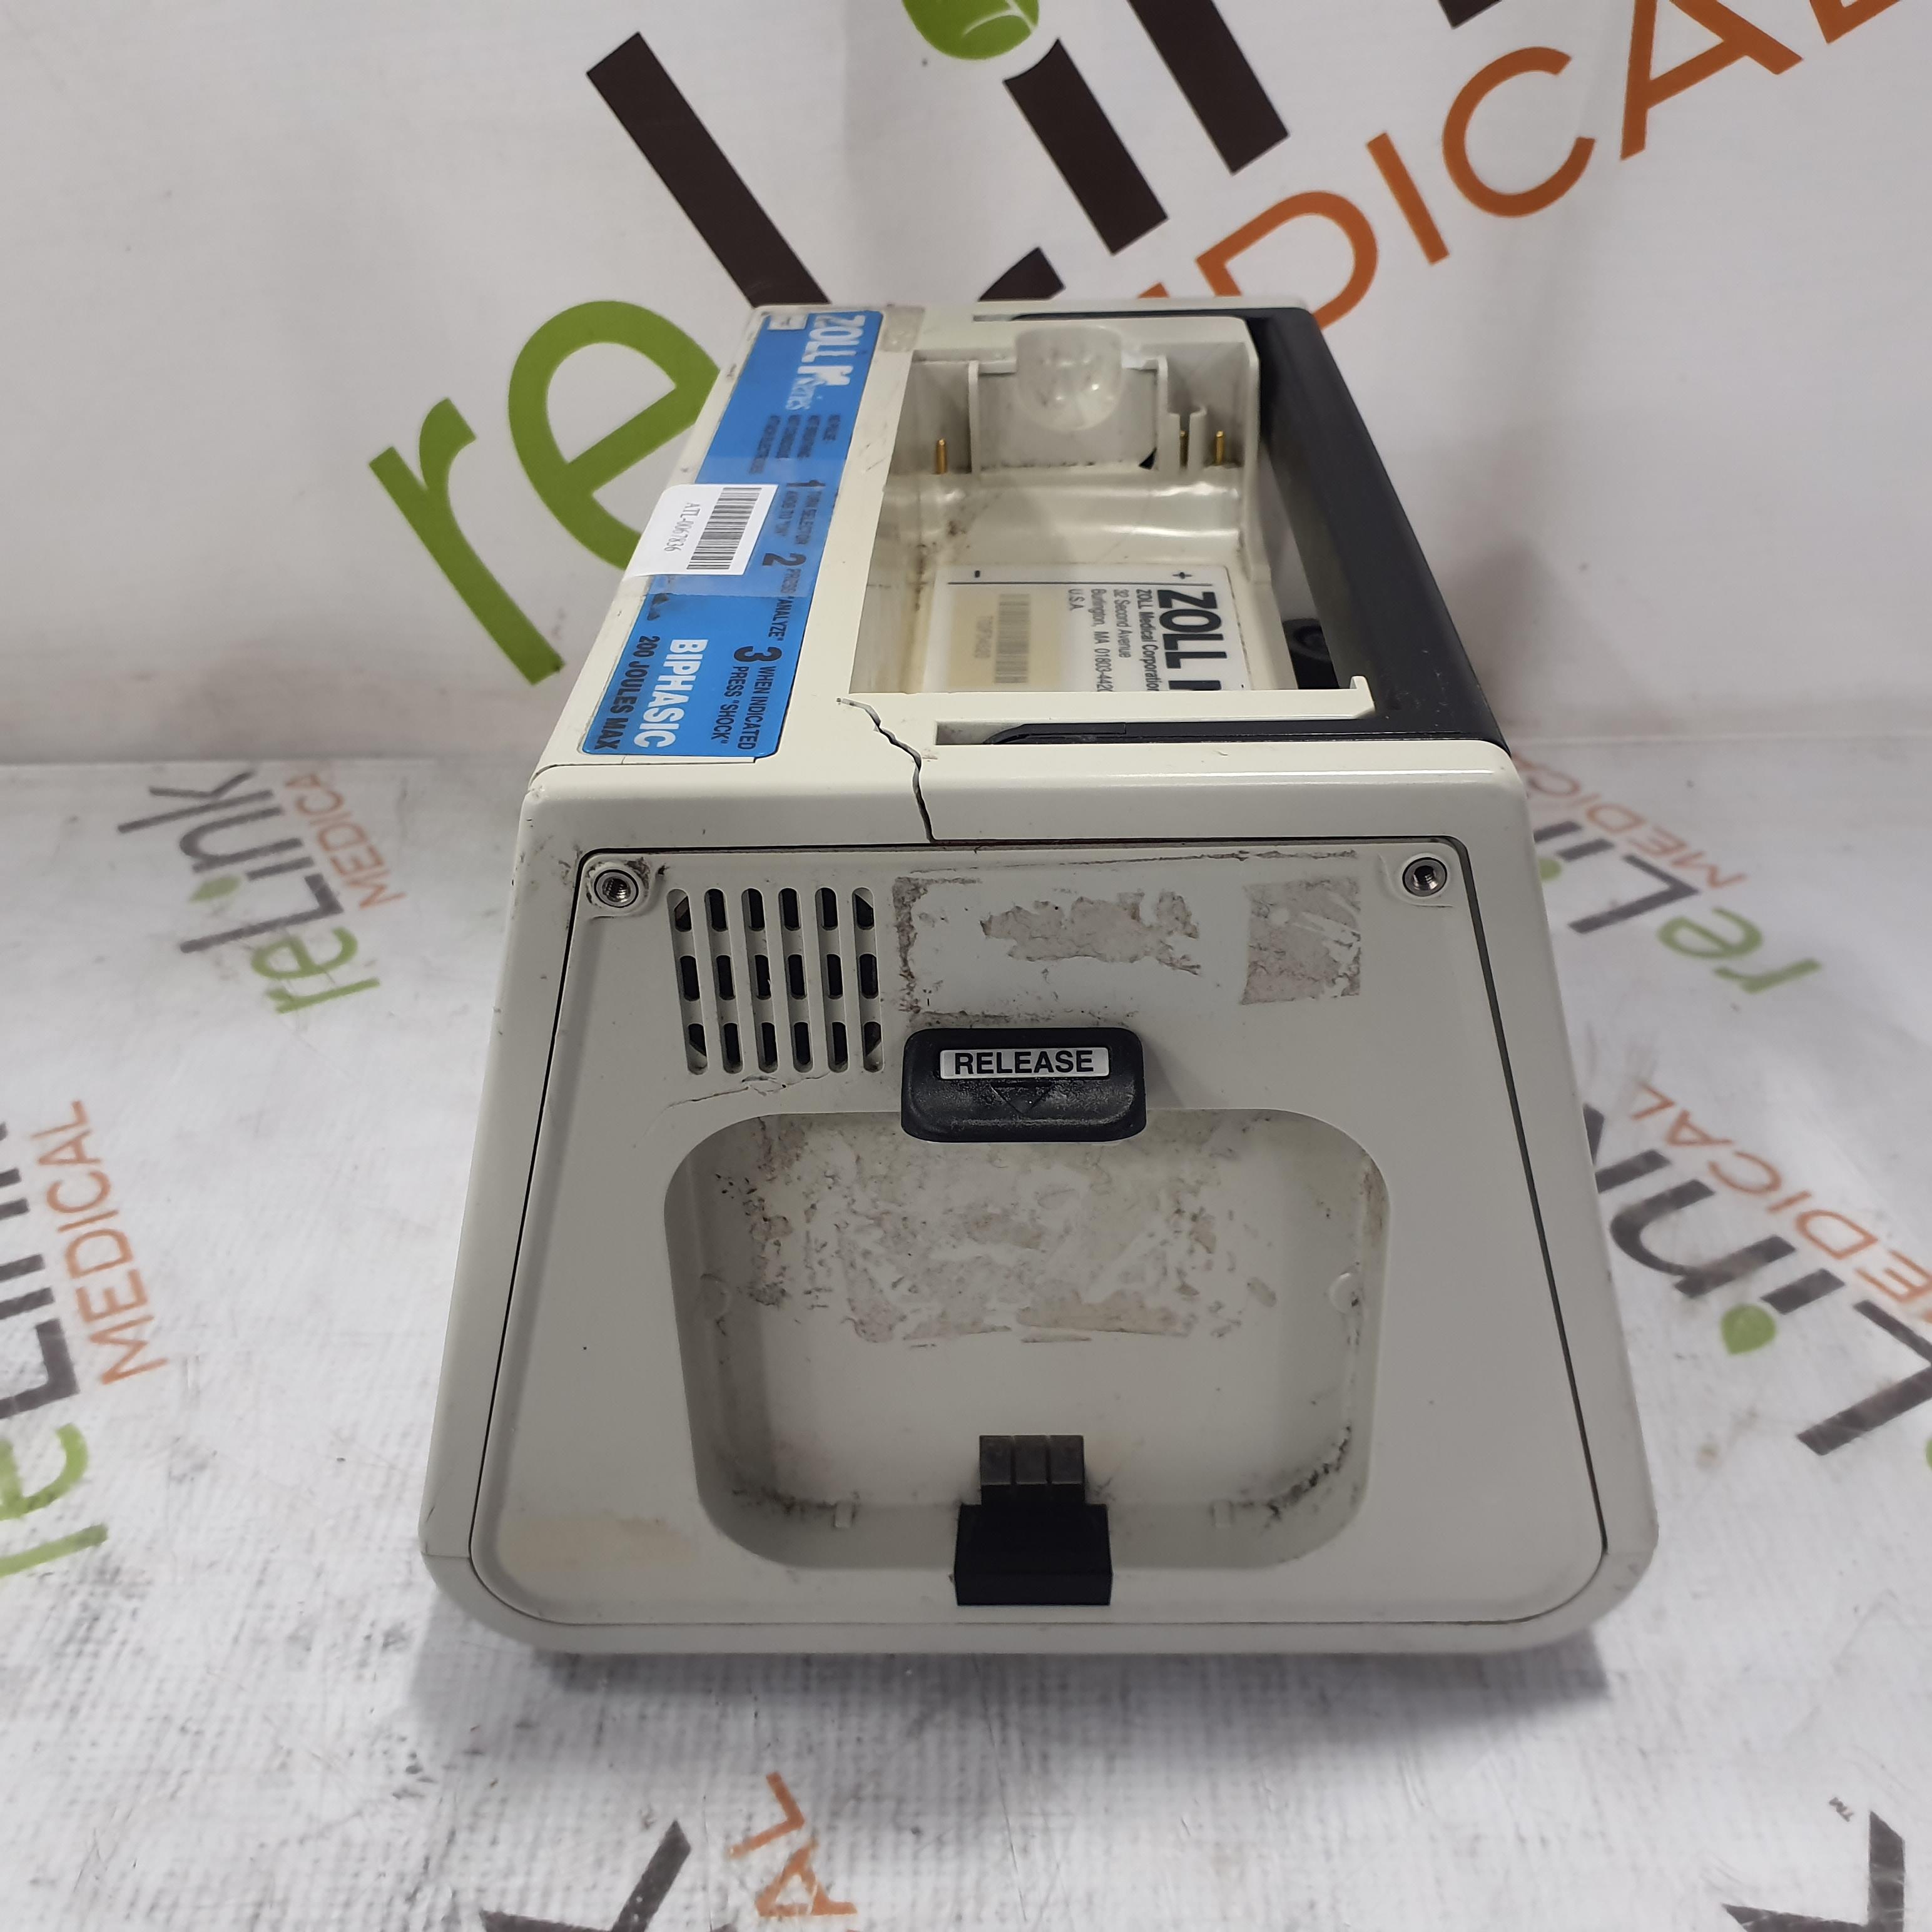 Zoll M Series Defibrillator - 377688